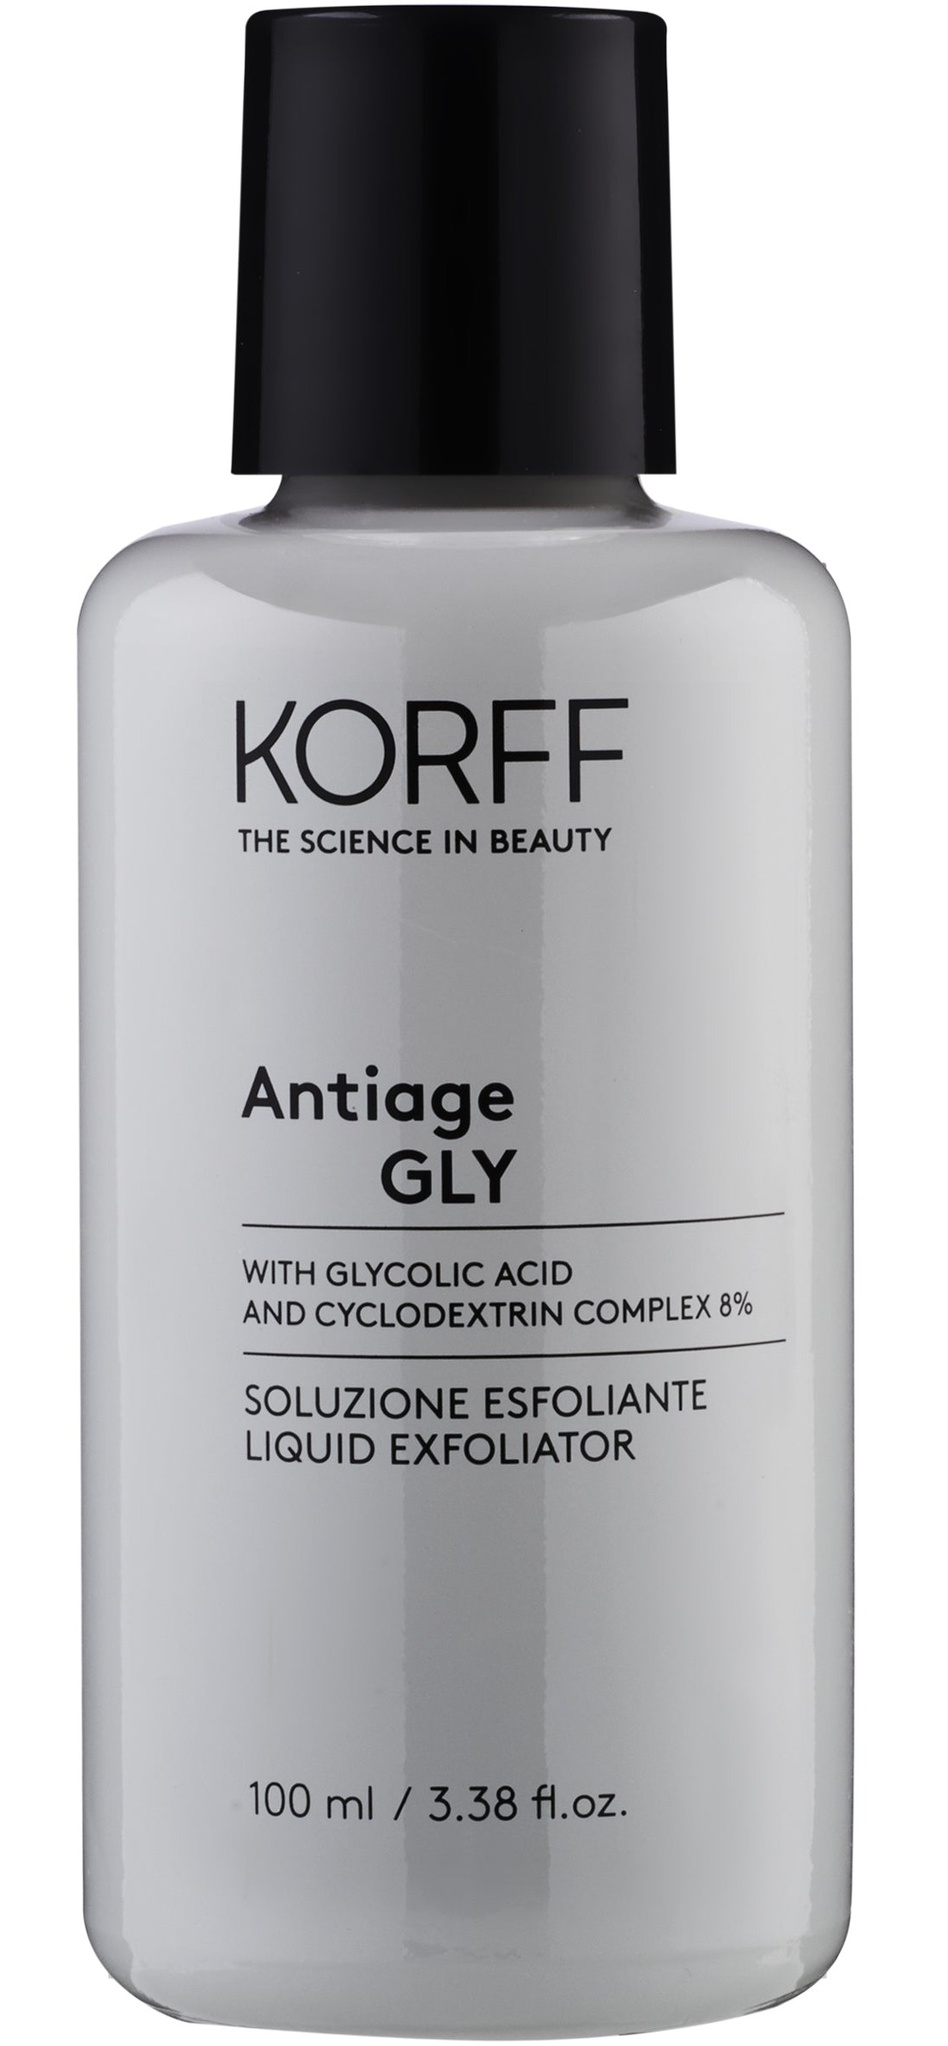 Korff Antiage GLY Liquid Exfoliator